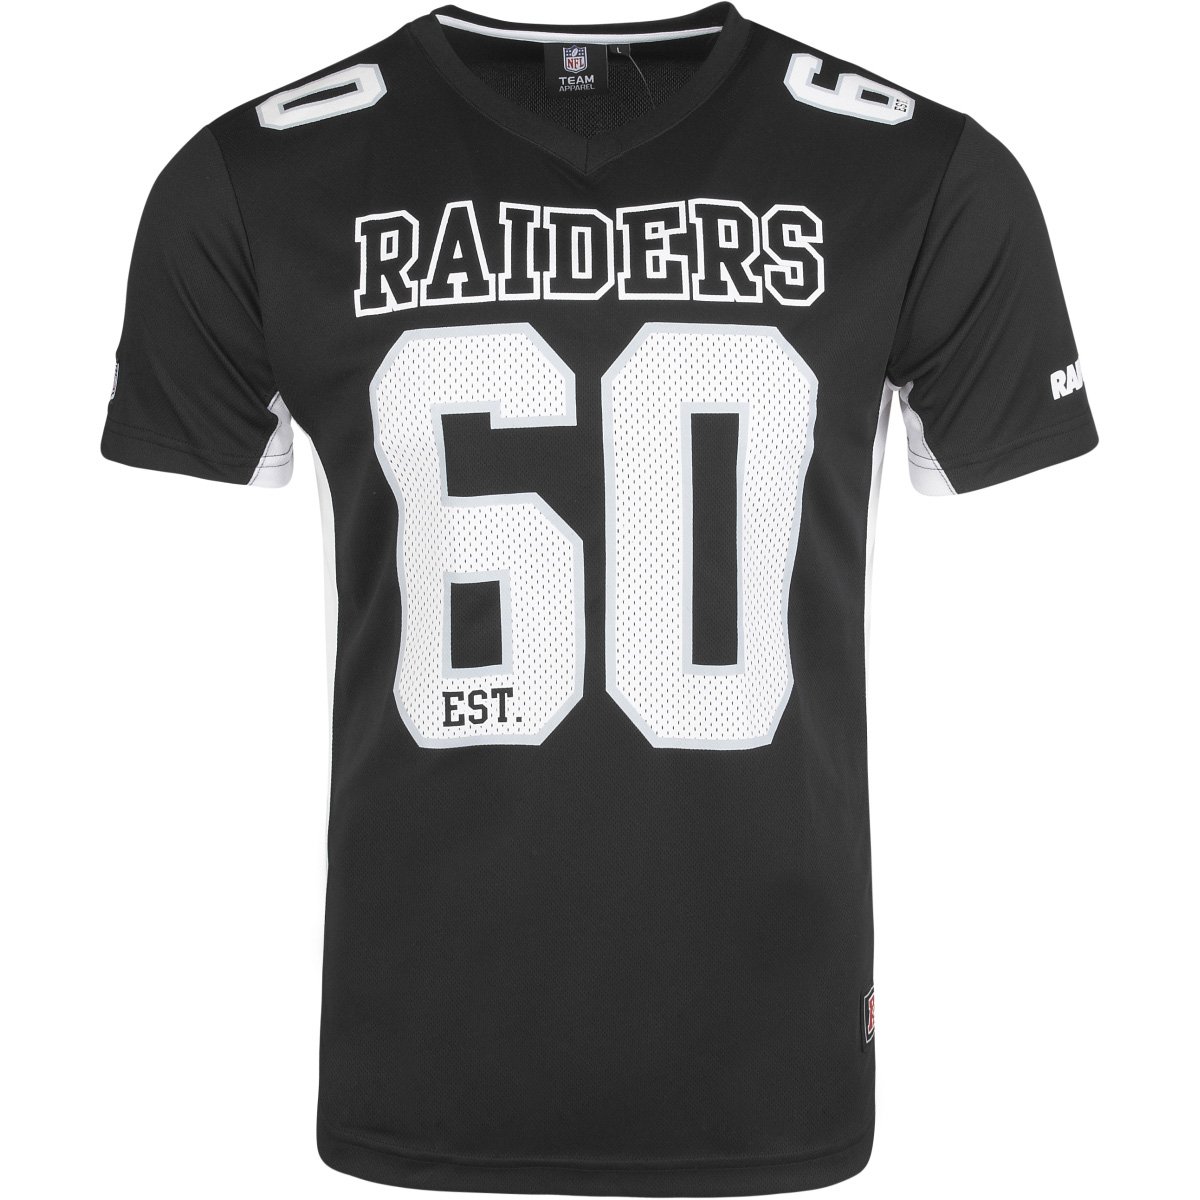 buy raiders jersey